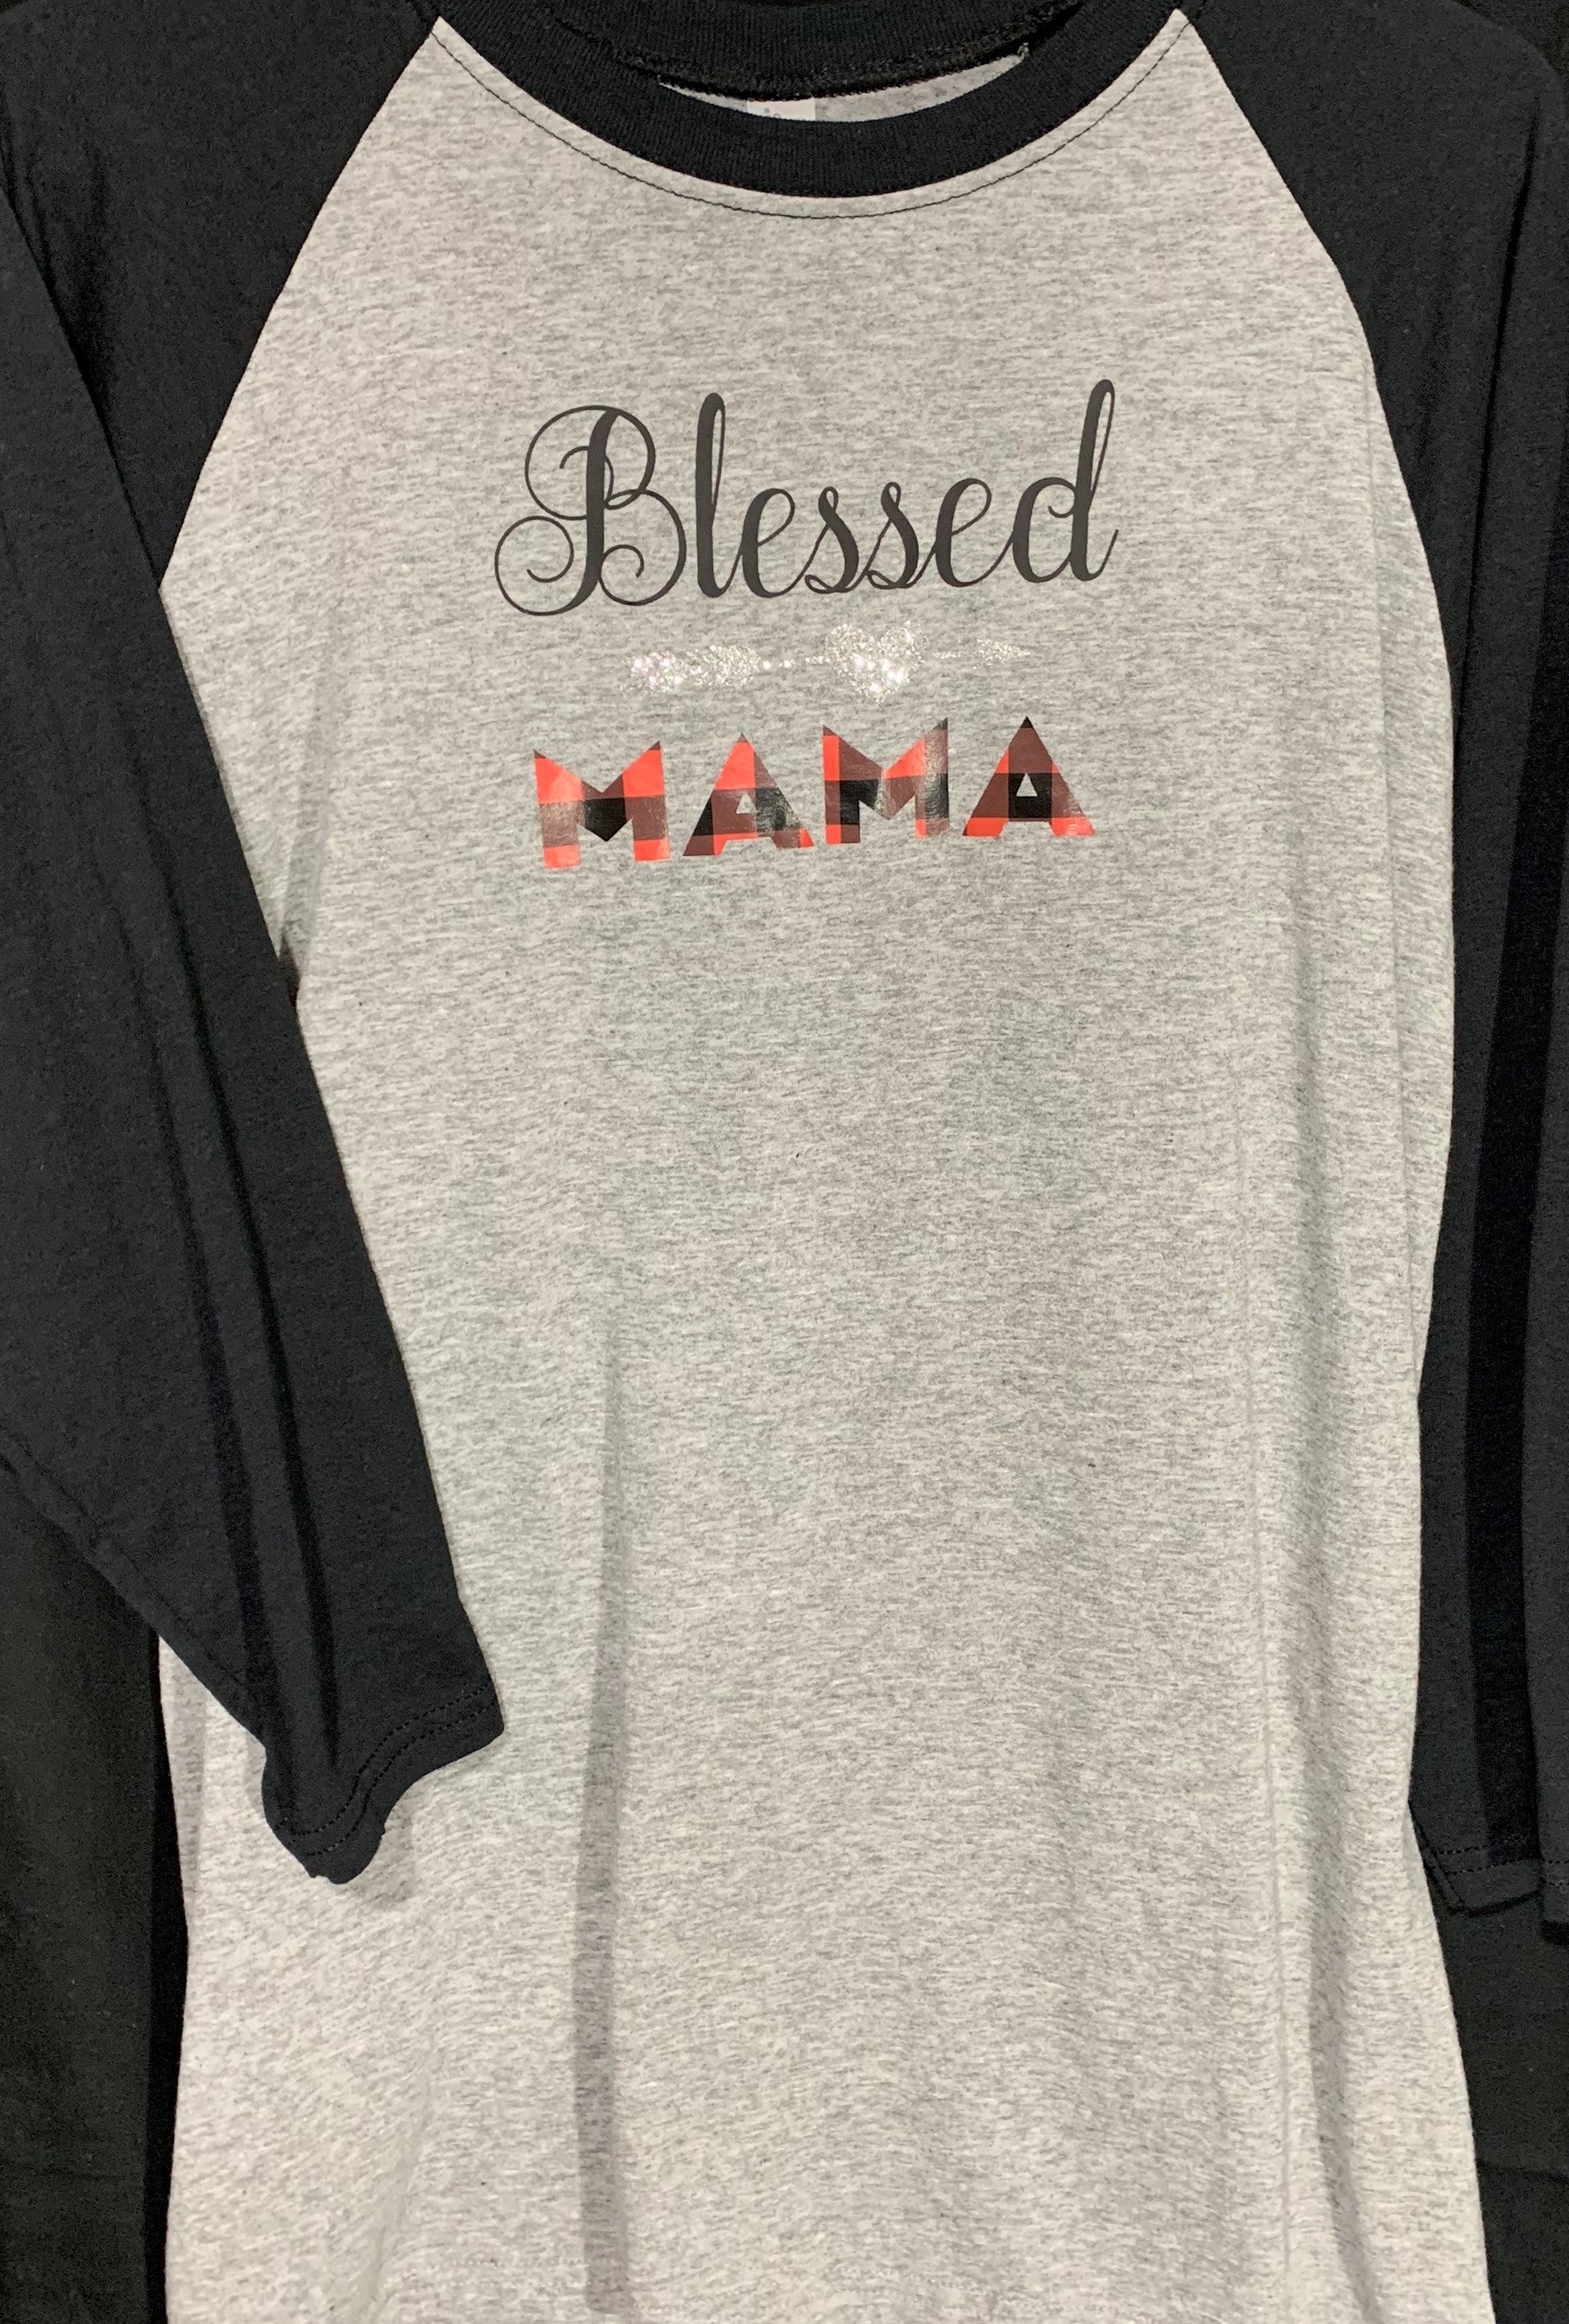 Blessed Mama Baseball Shirt